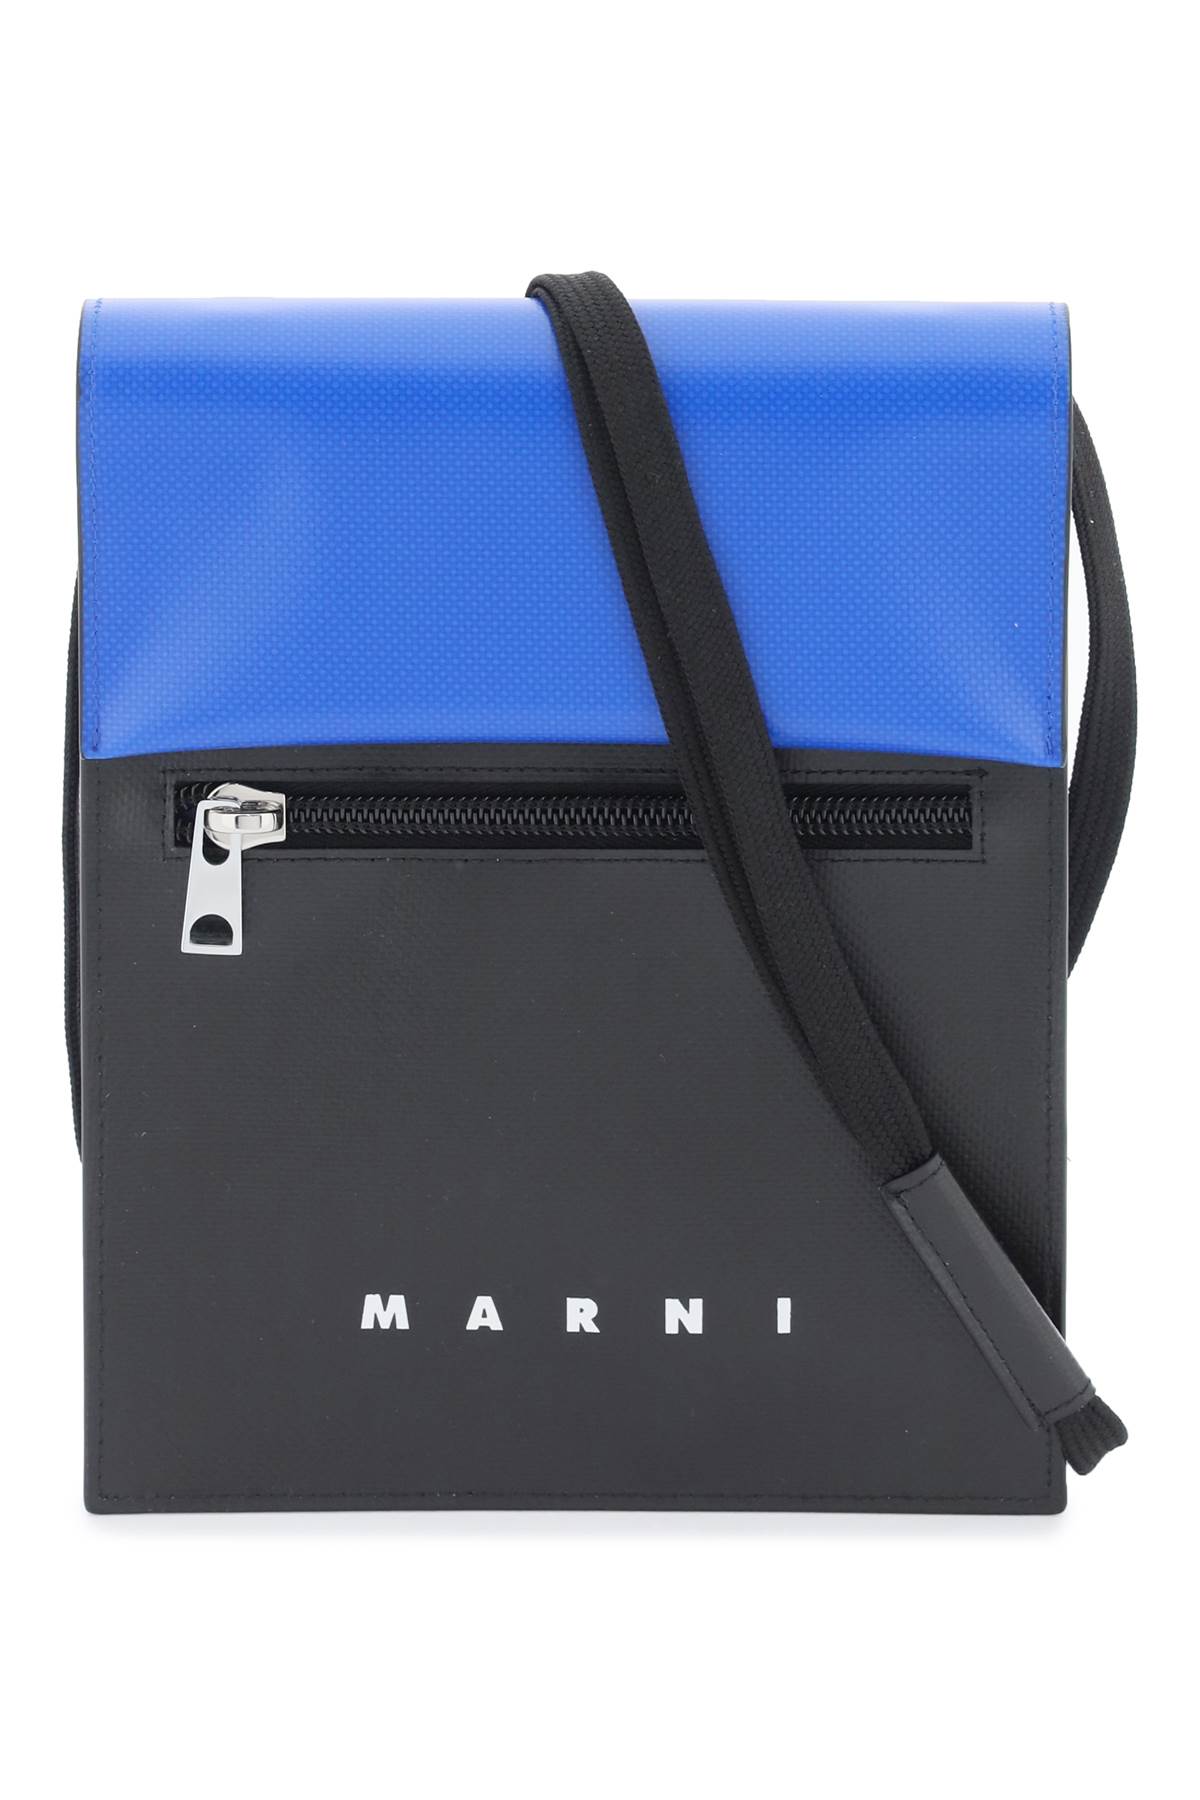 Marni Tribeca Crossbody Bag